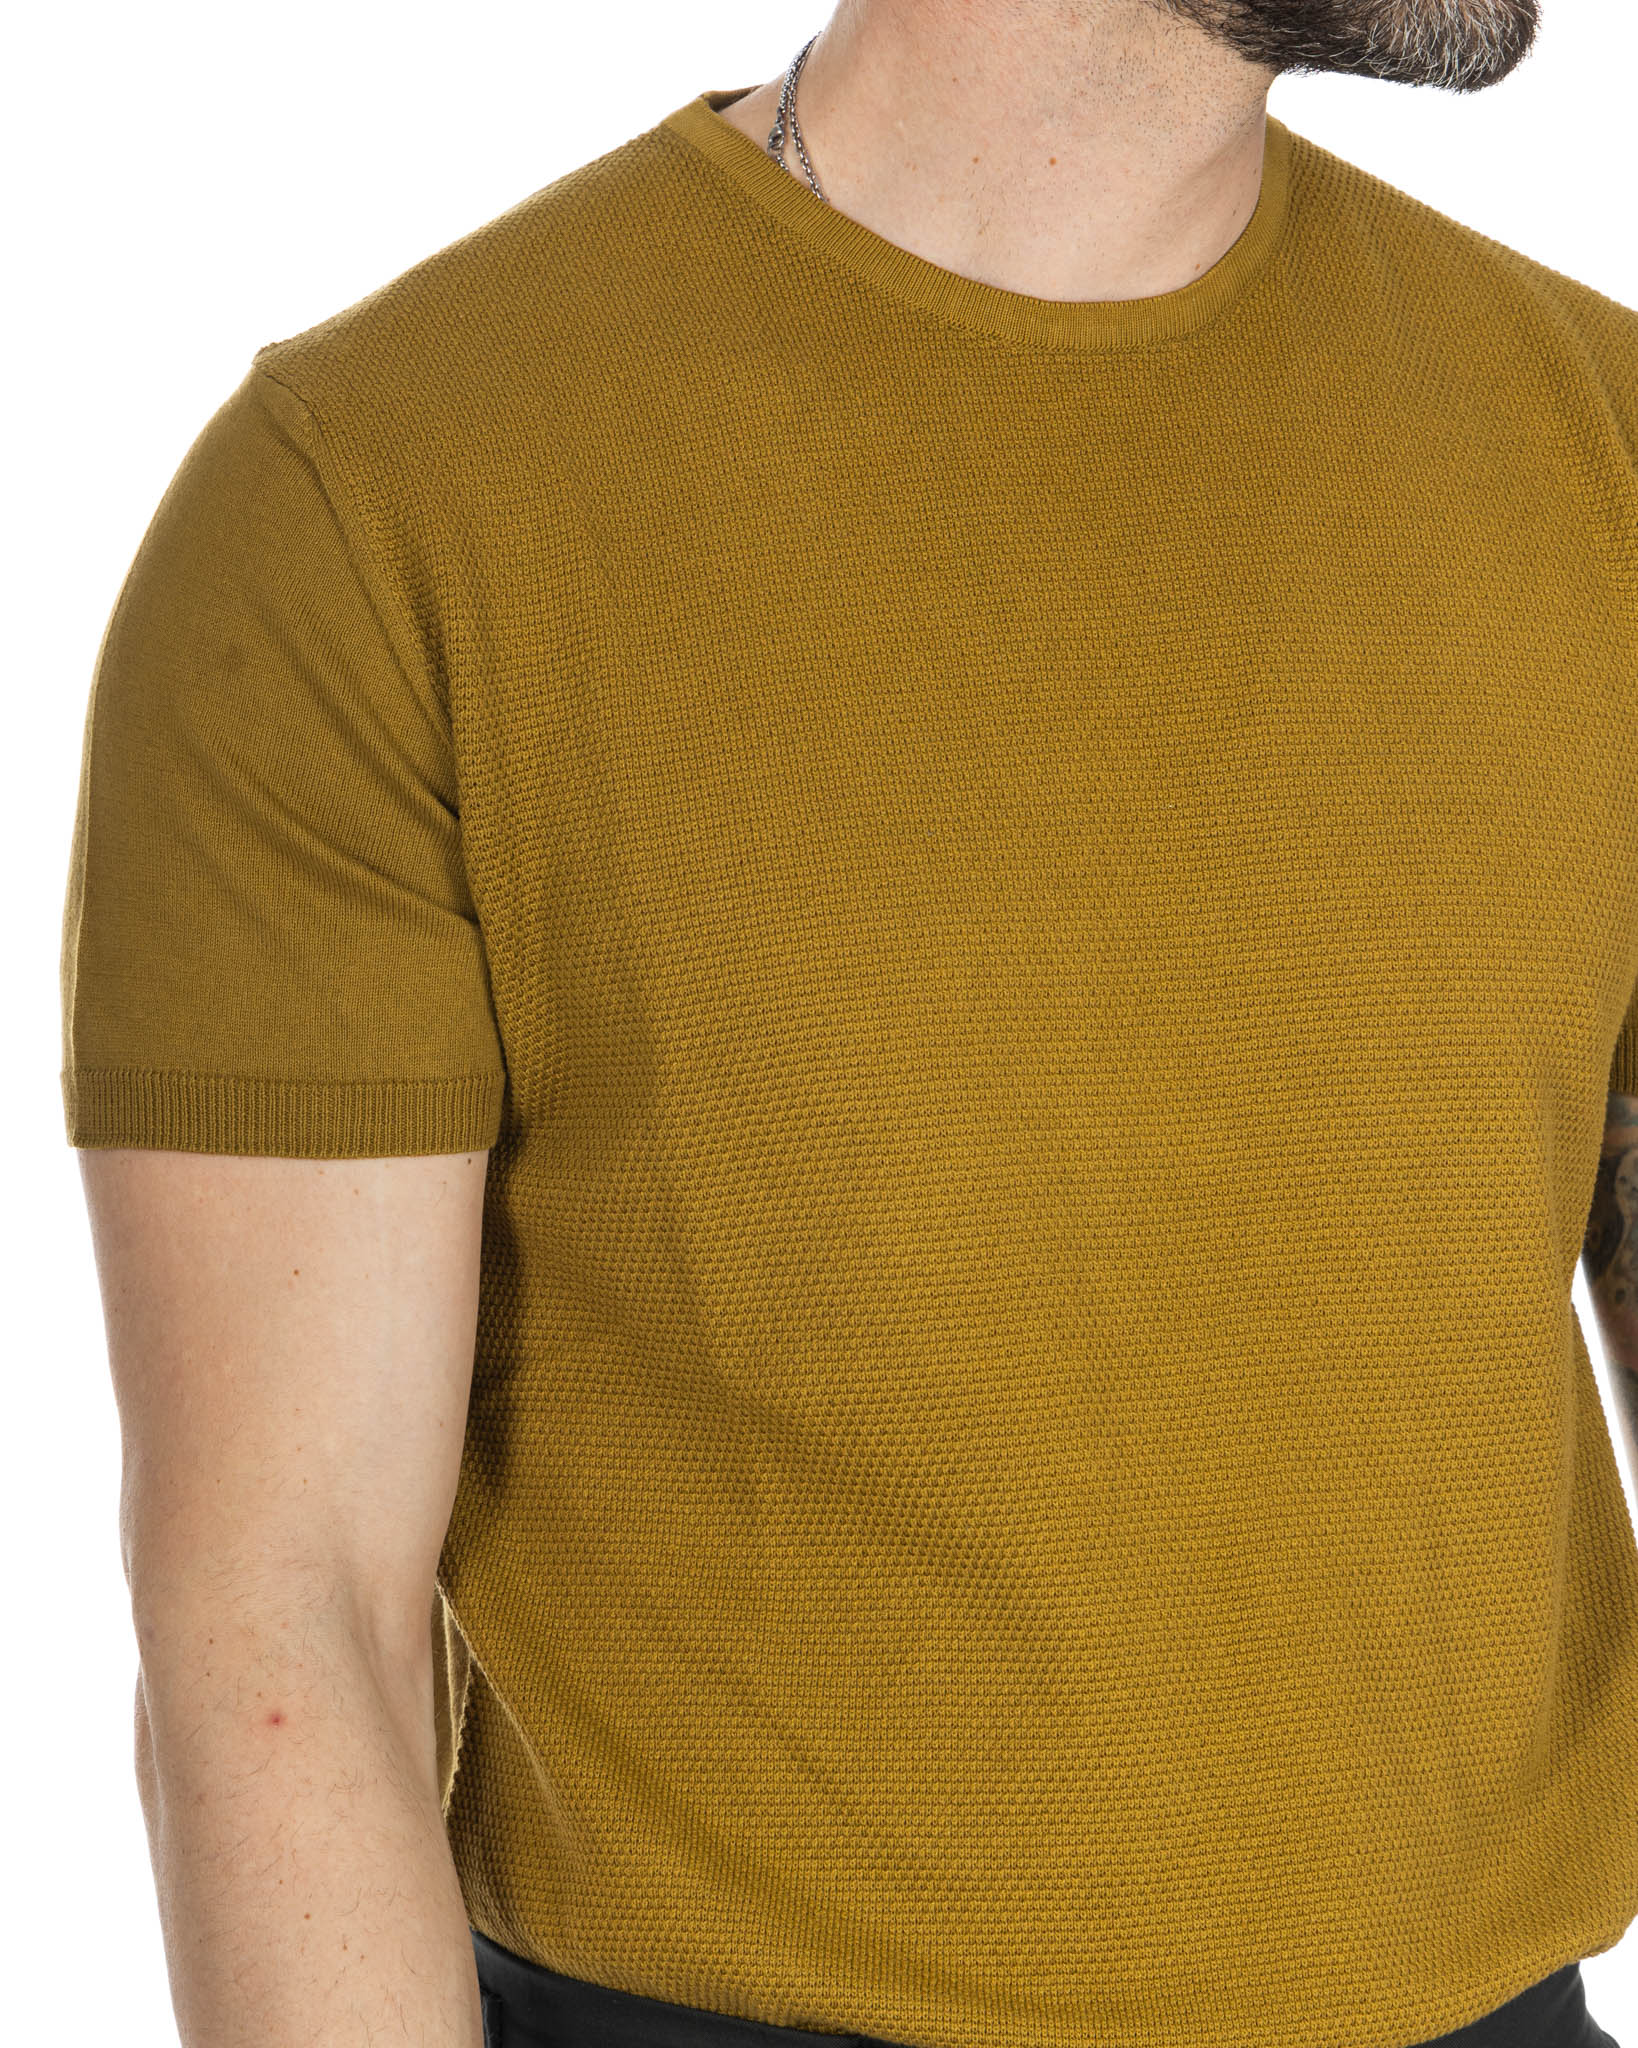 Lorenzo - t-shirt cammello in maglia jacquard